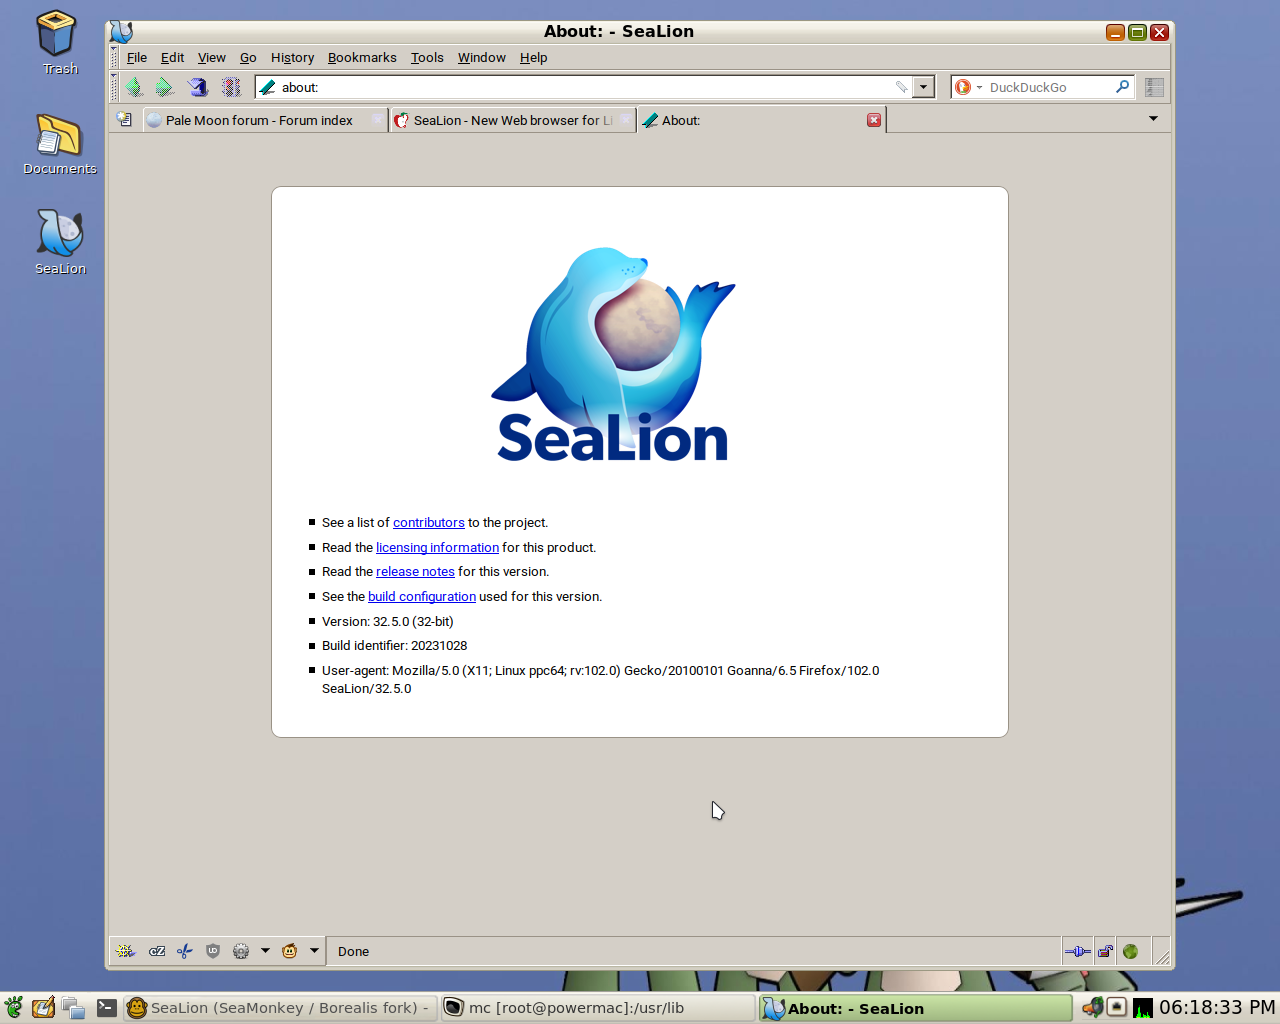 sealion-32.5.0-ppc-linux.png